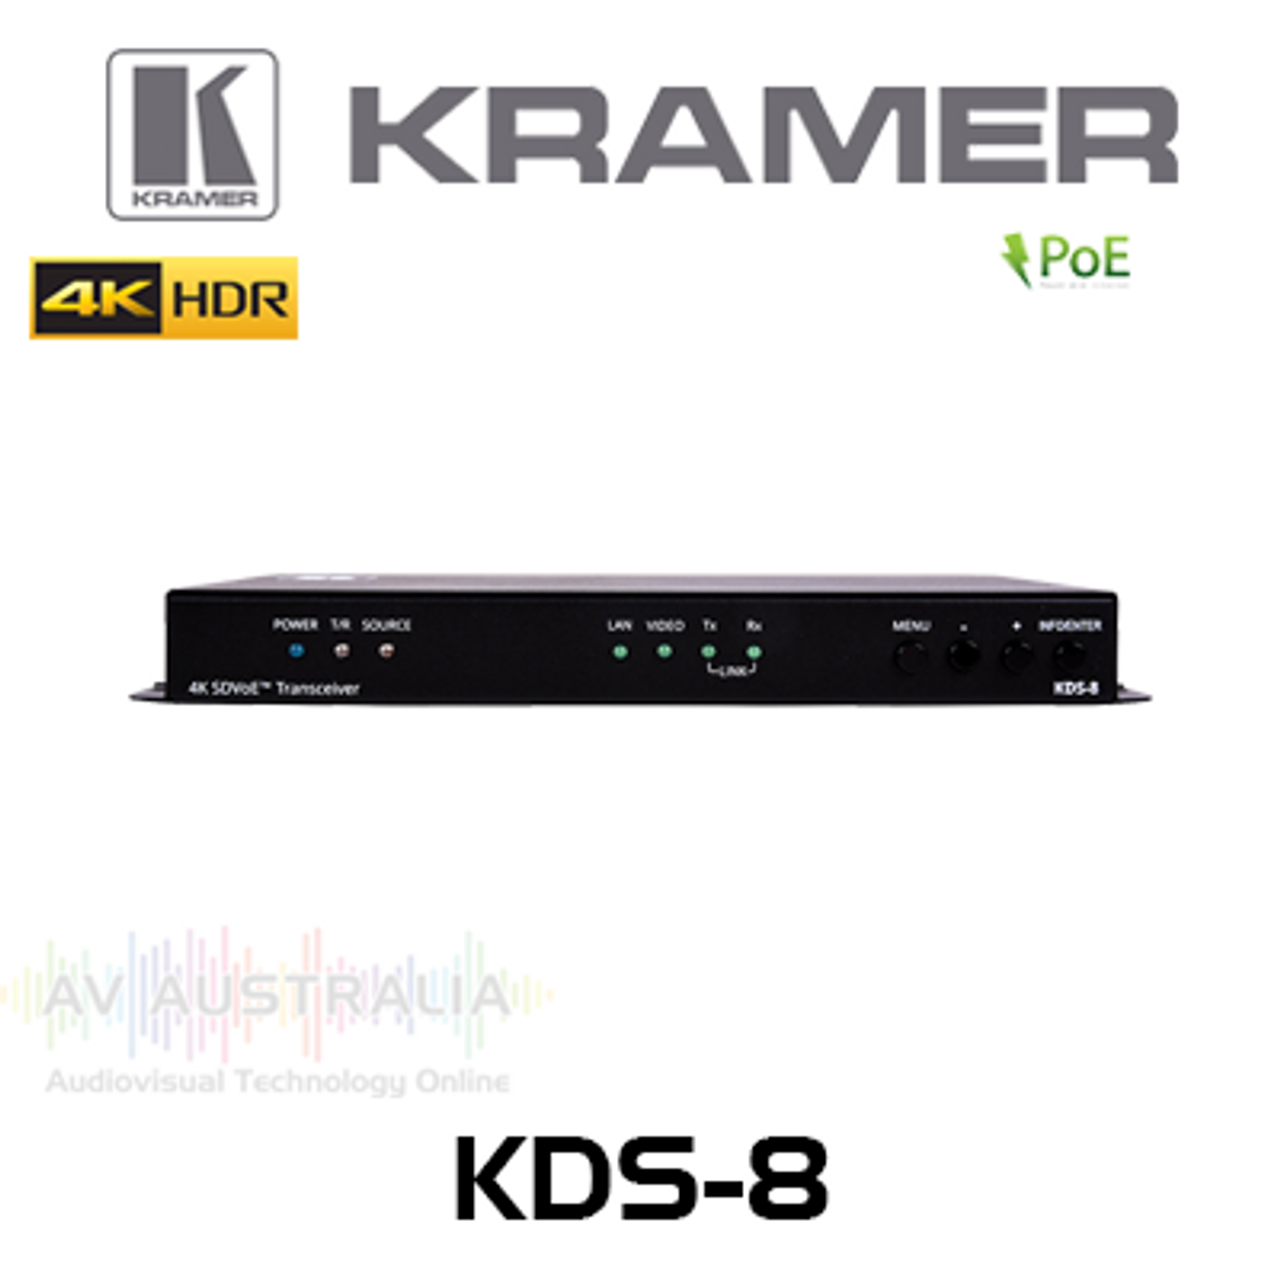 Kramer KDS-8 Zero Latency 4K HDR SDVoE Video Streaming Transceiver Over Copper